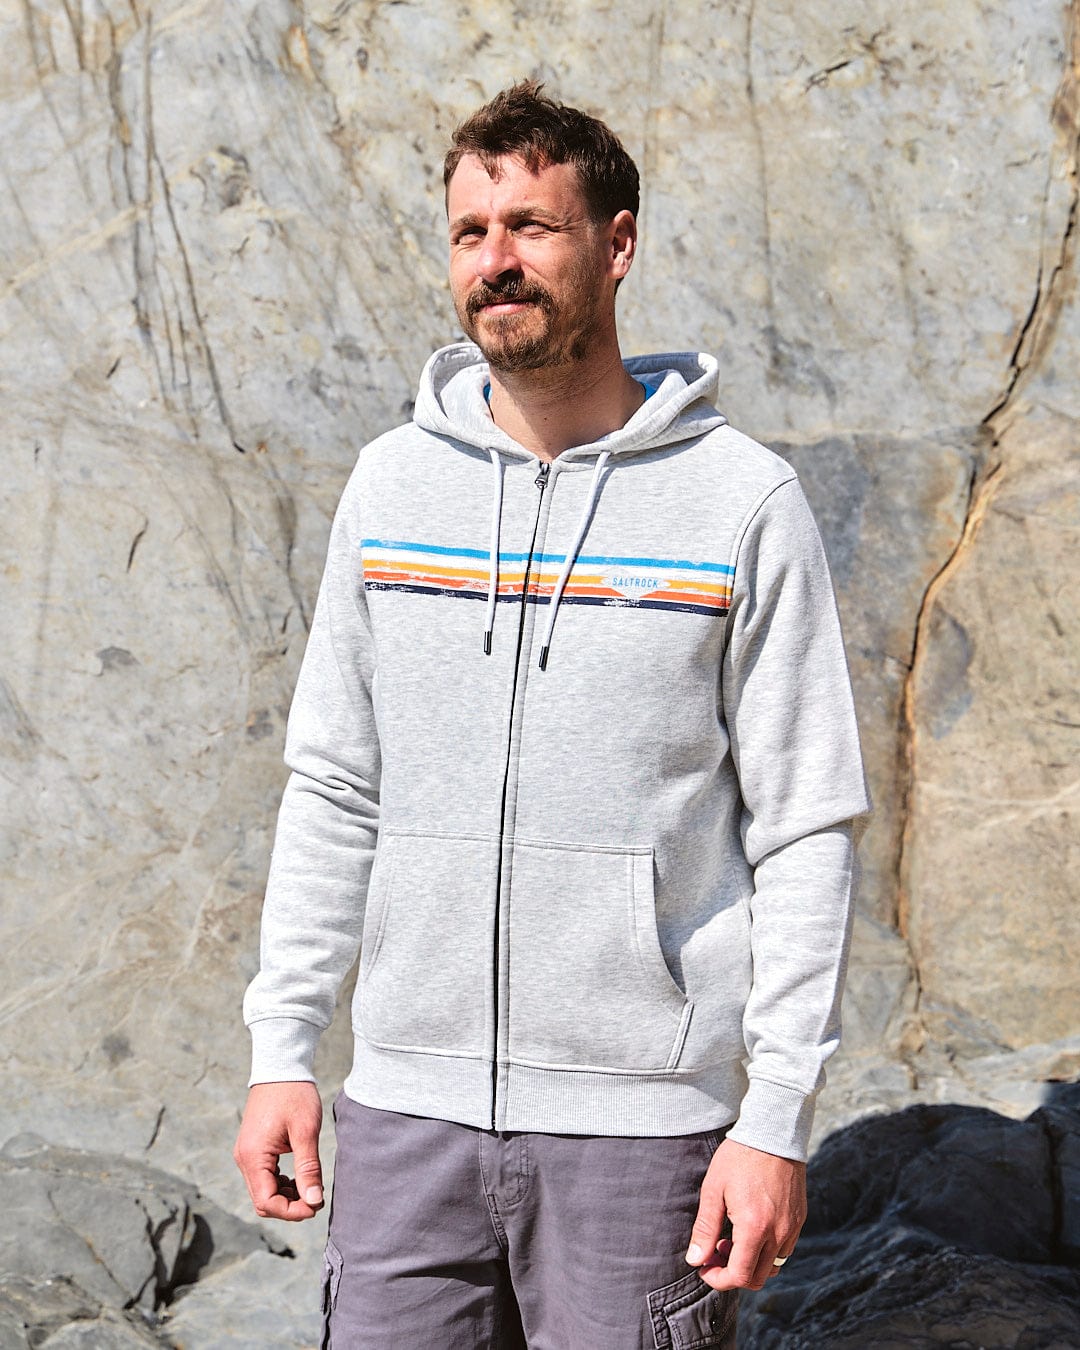 A man in a Saltrock Taped Stripe - Mens Zip Hoodie - Grey standing next to a rock.